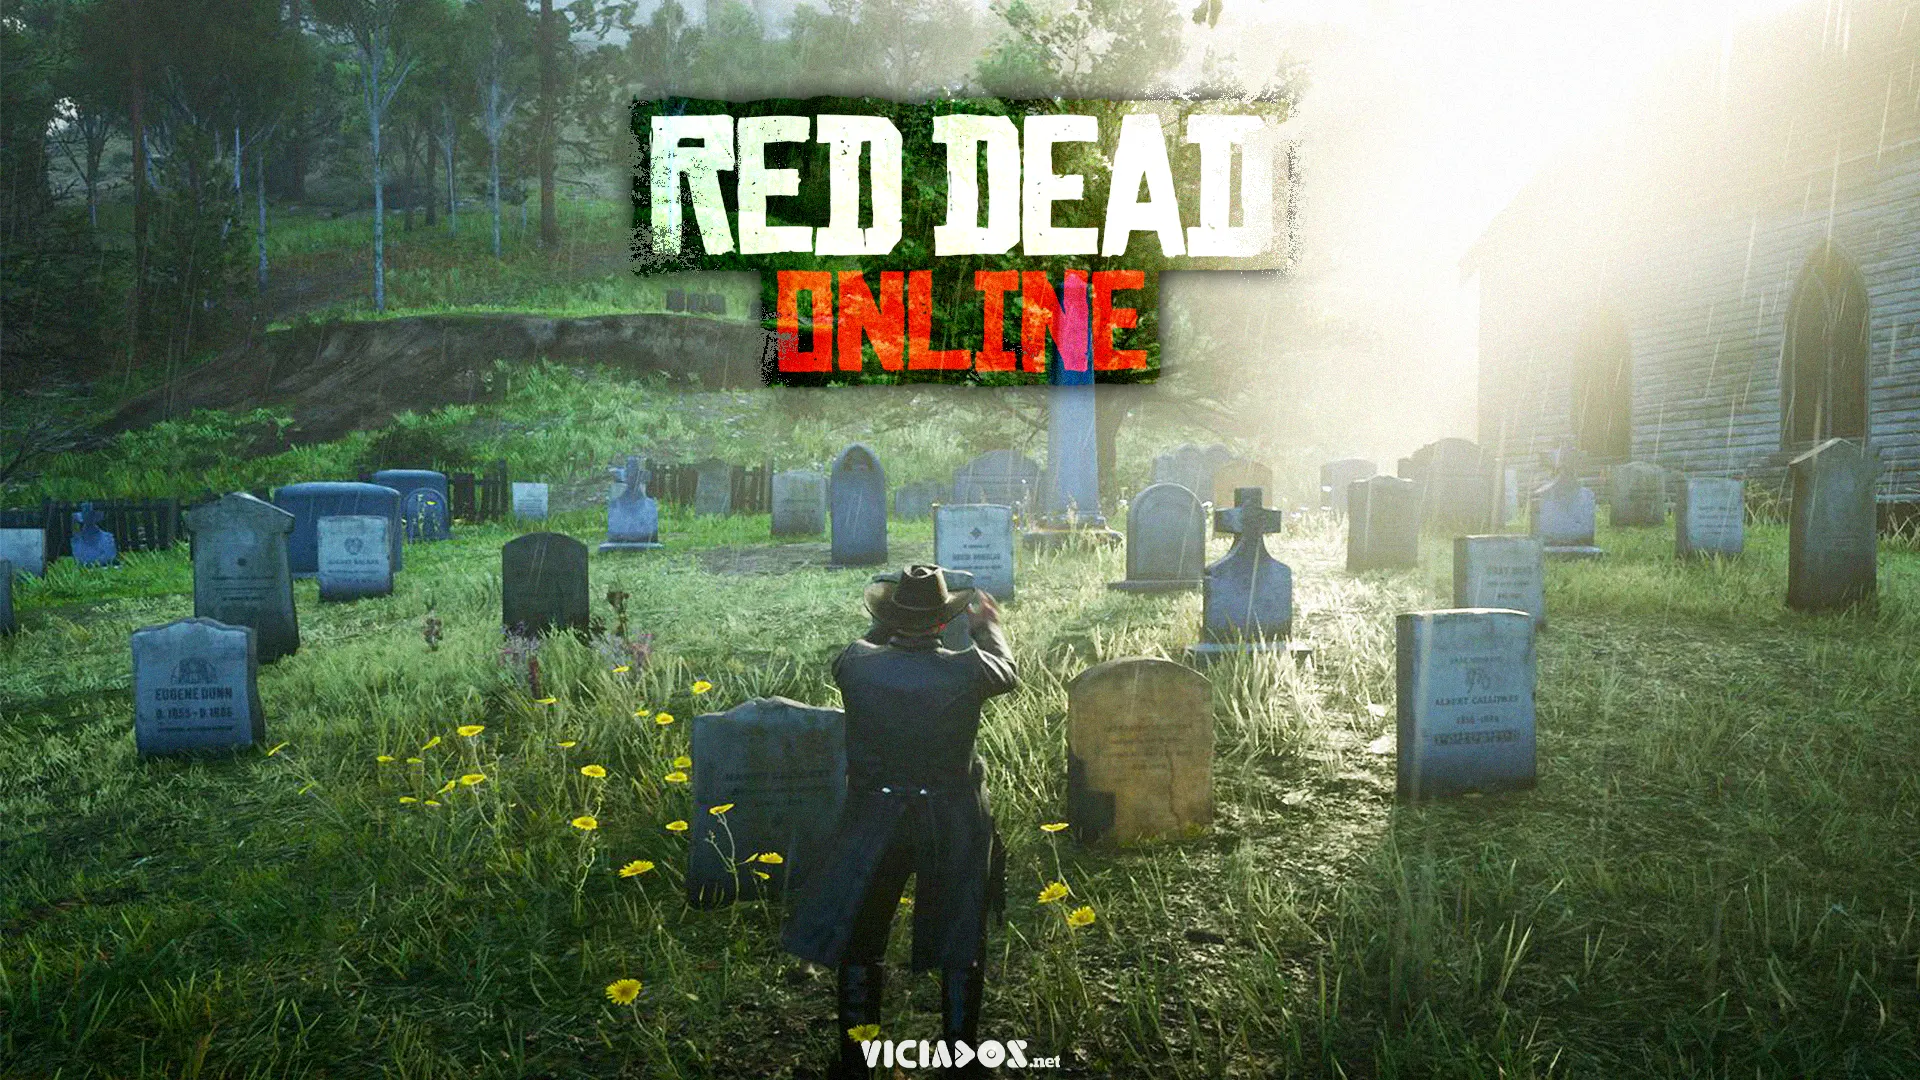 Funeral de Red Dead Online acontece hoje; Saiba como participar e movimentar os servidores! 2022 Viciados